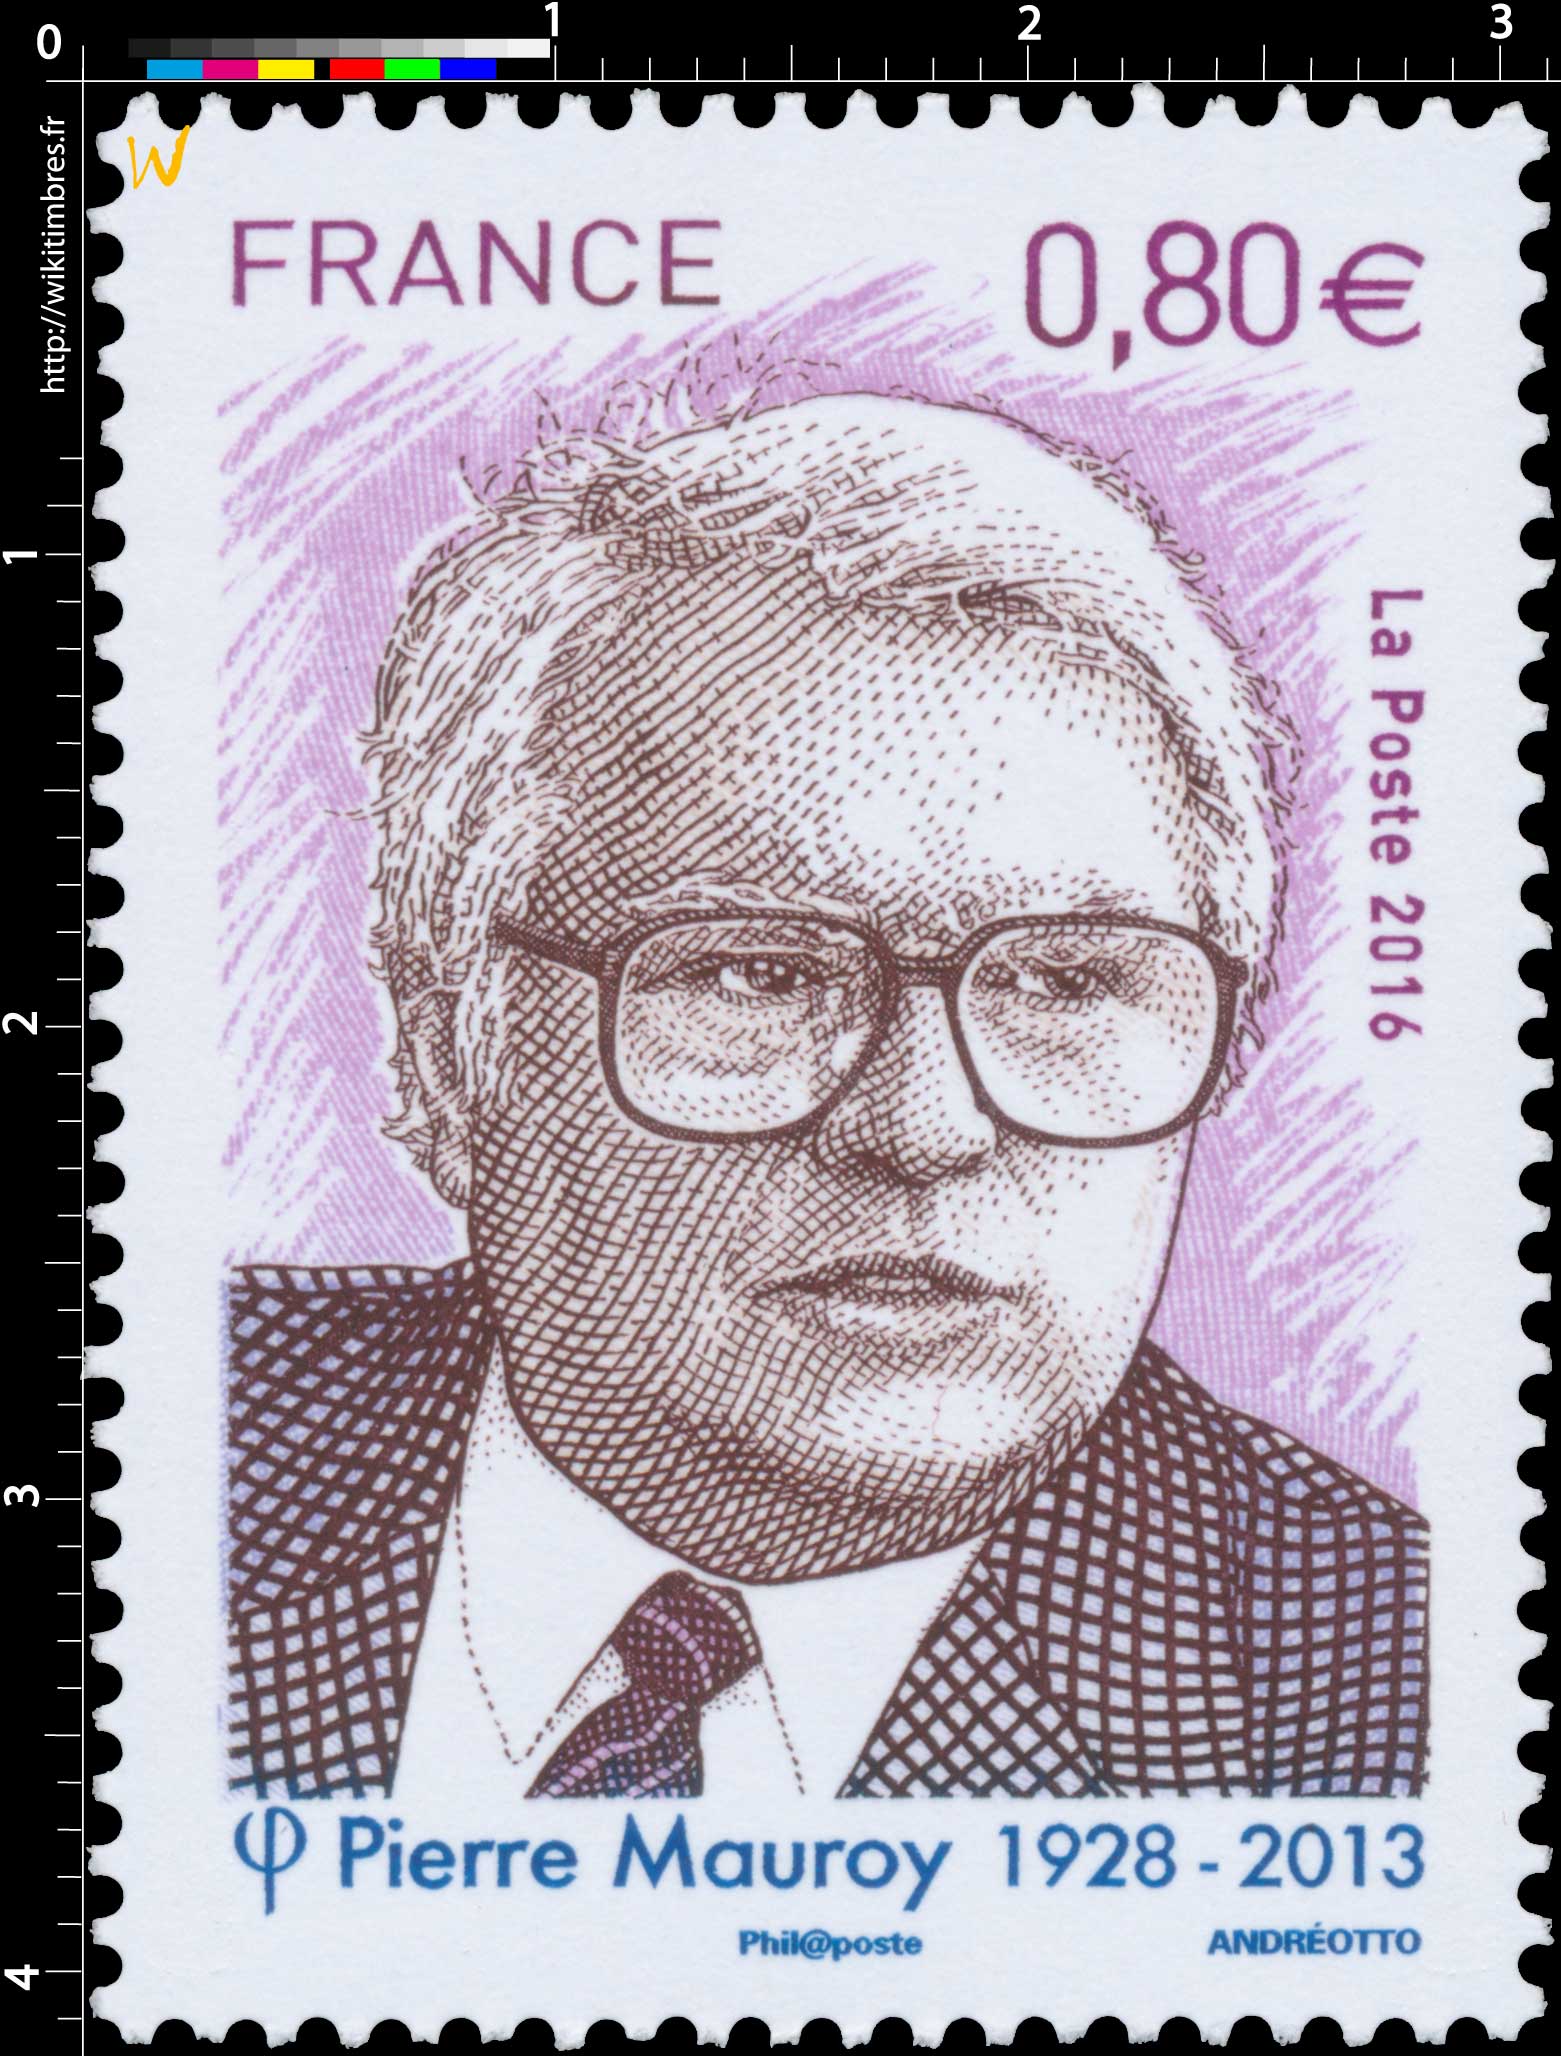 2016 Pierre Mauroy 1928 - 2013